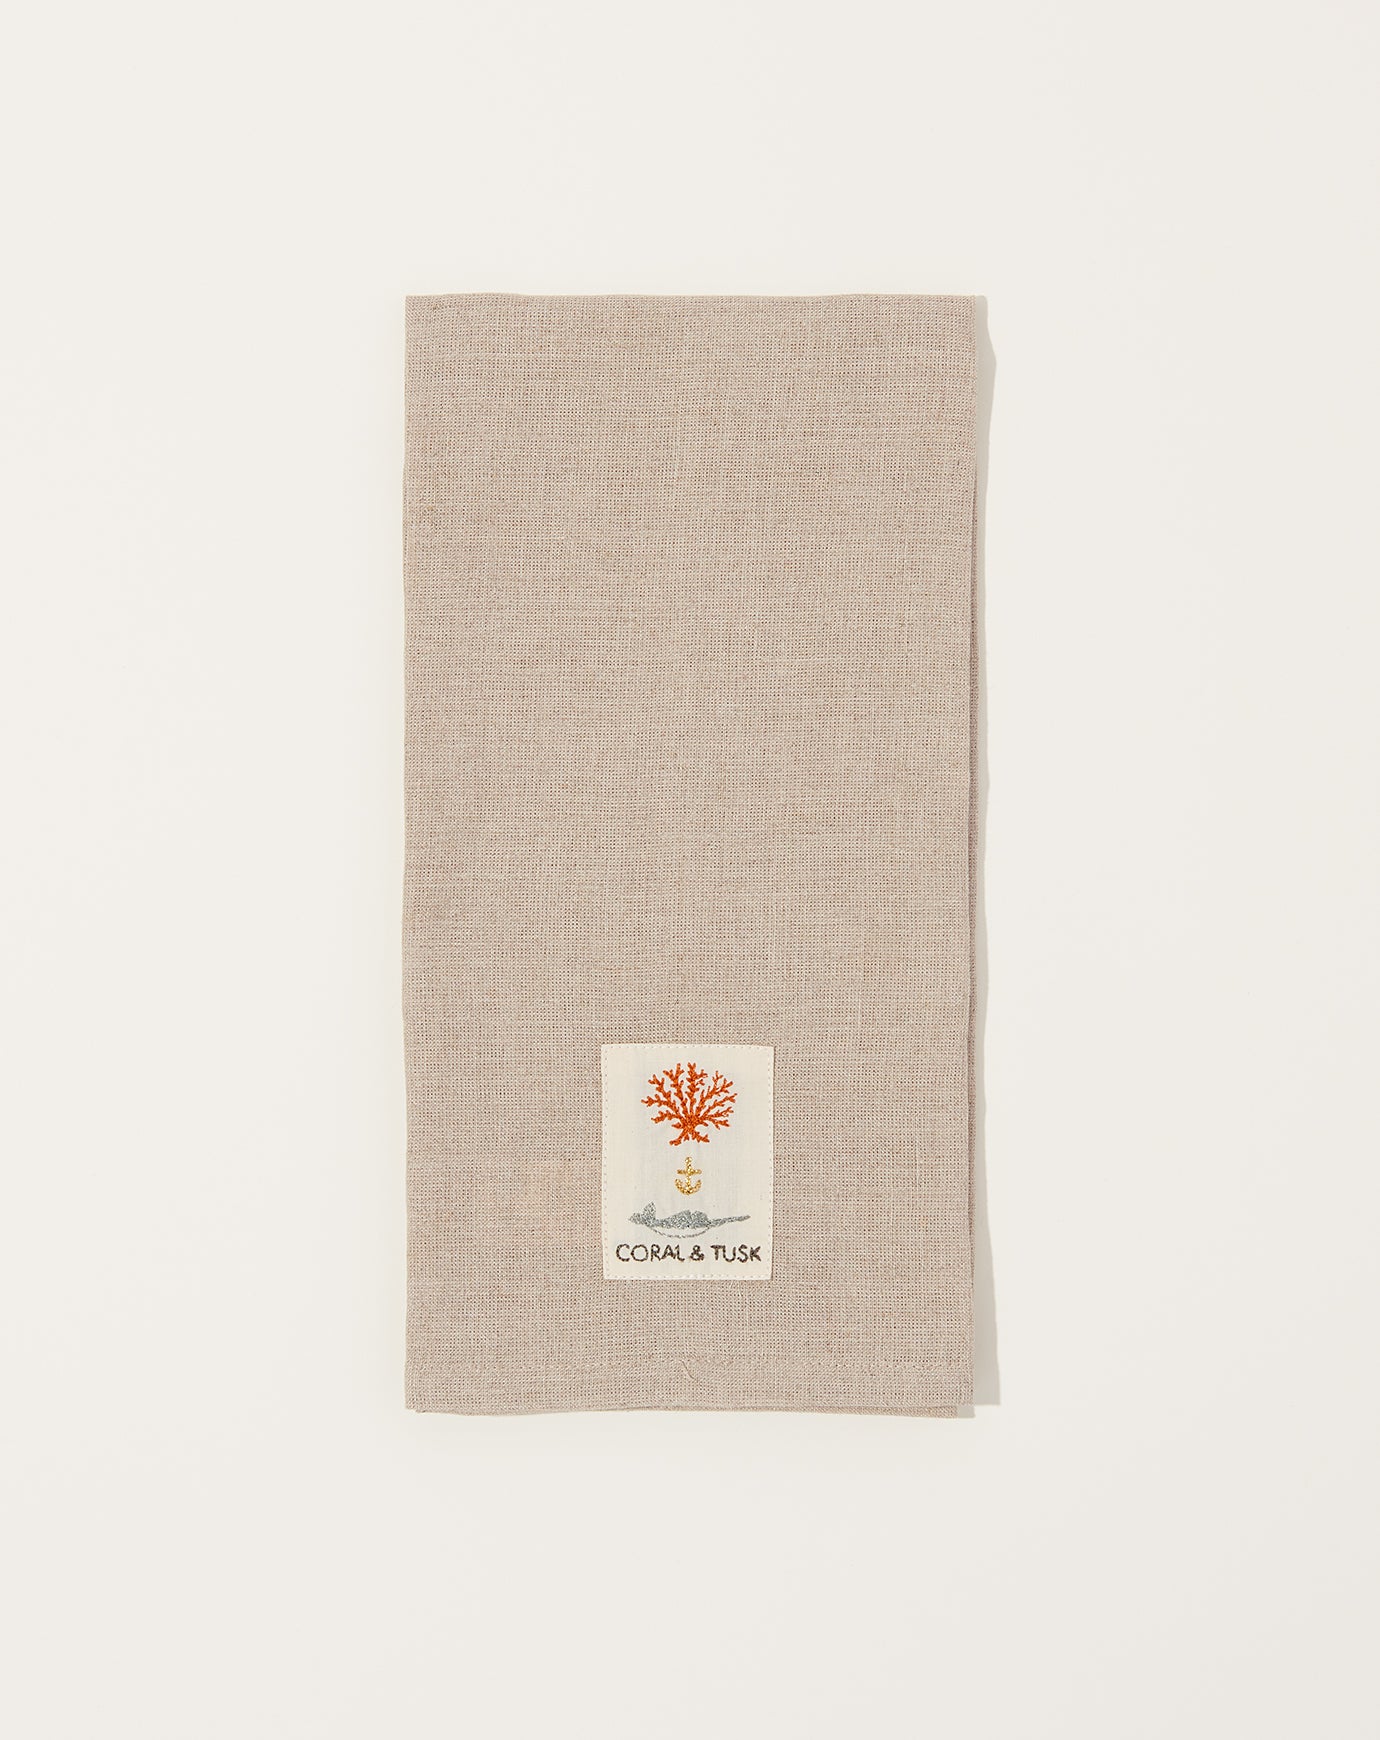 Coral & Tusk Stockings Tea Towel